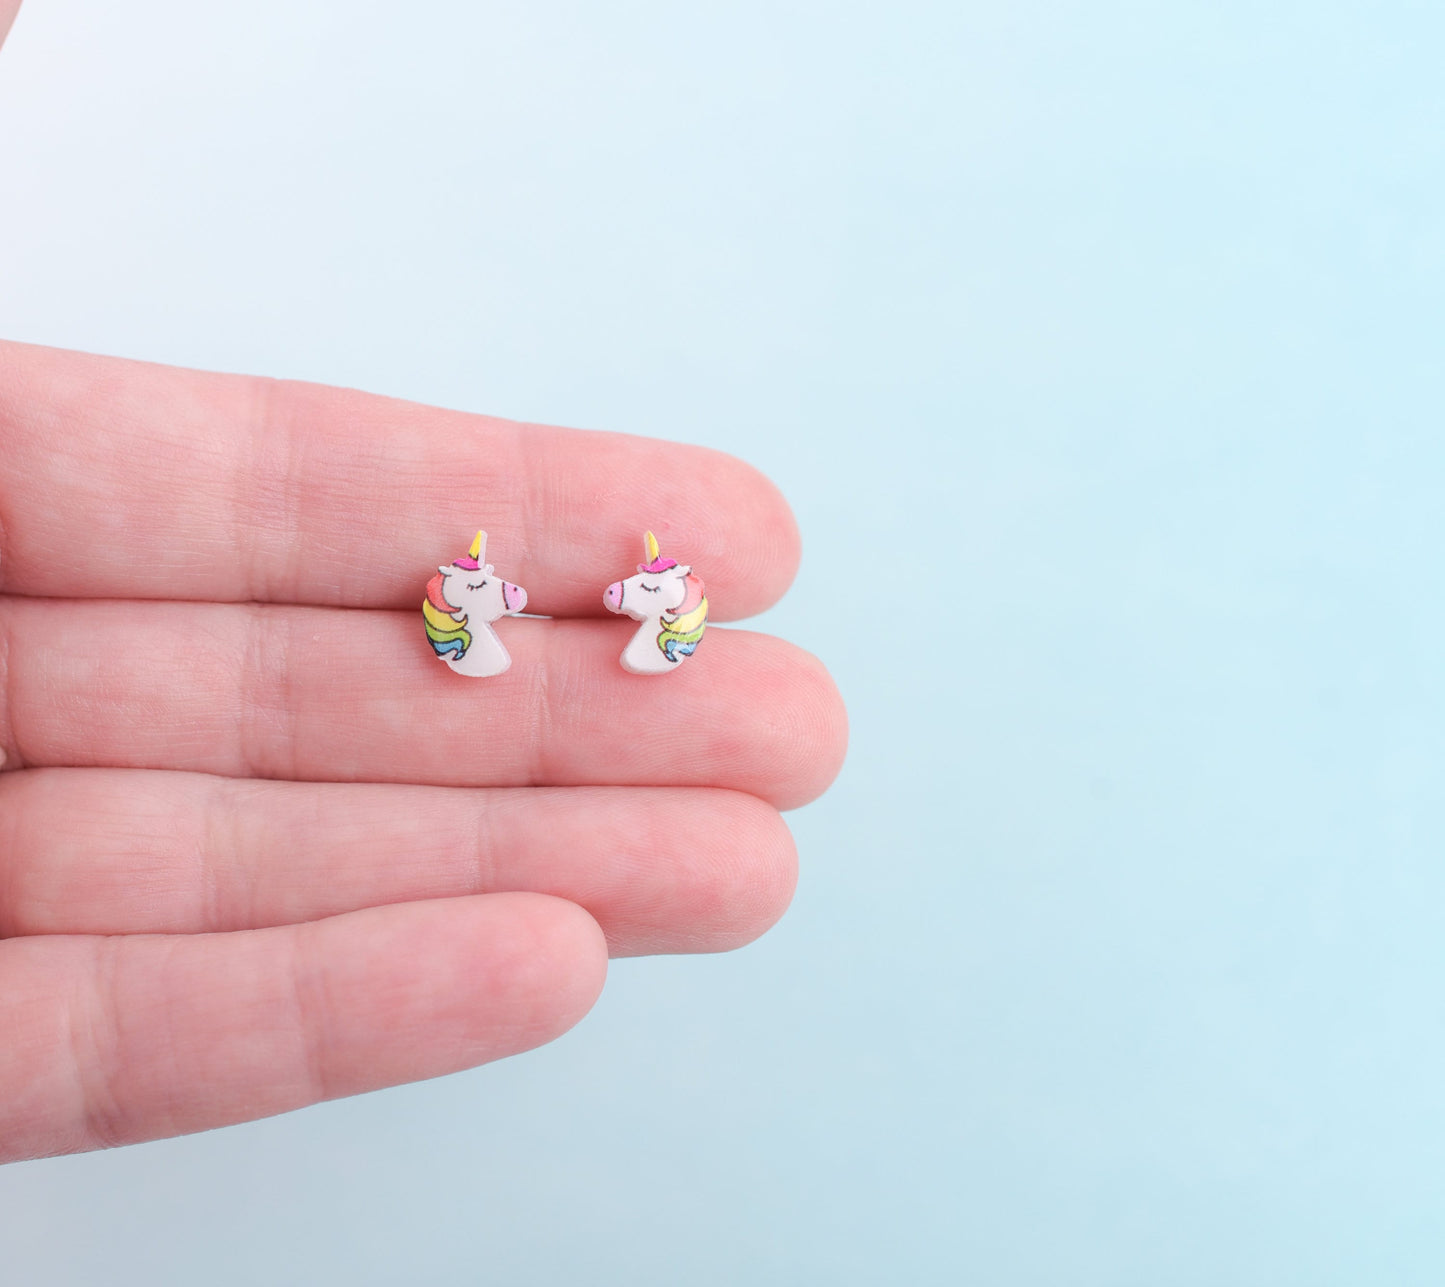 Mini Rainbow Unicorn Earrings with Titanium Posts